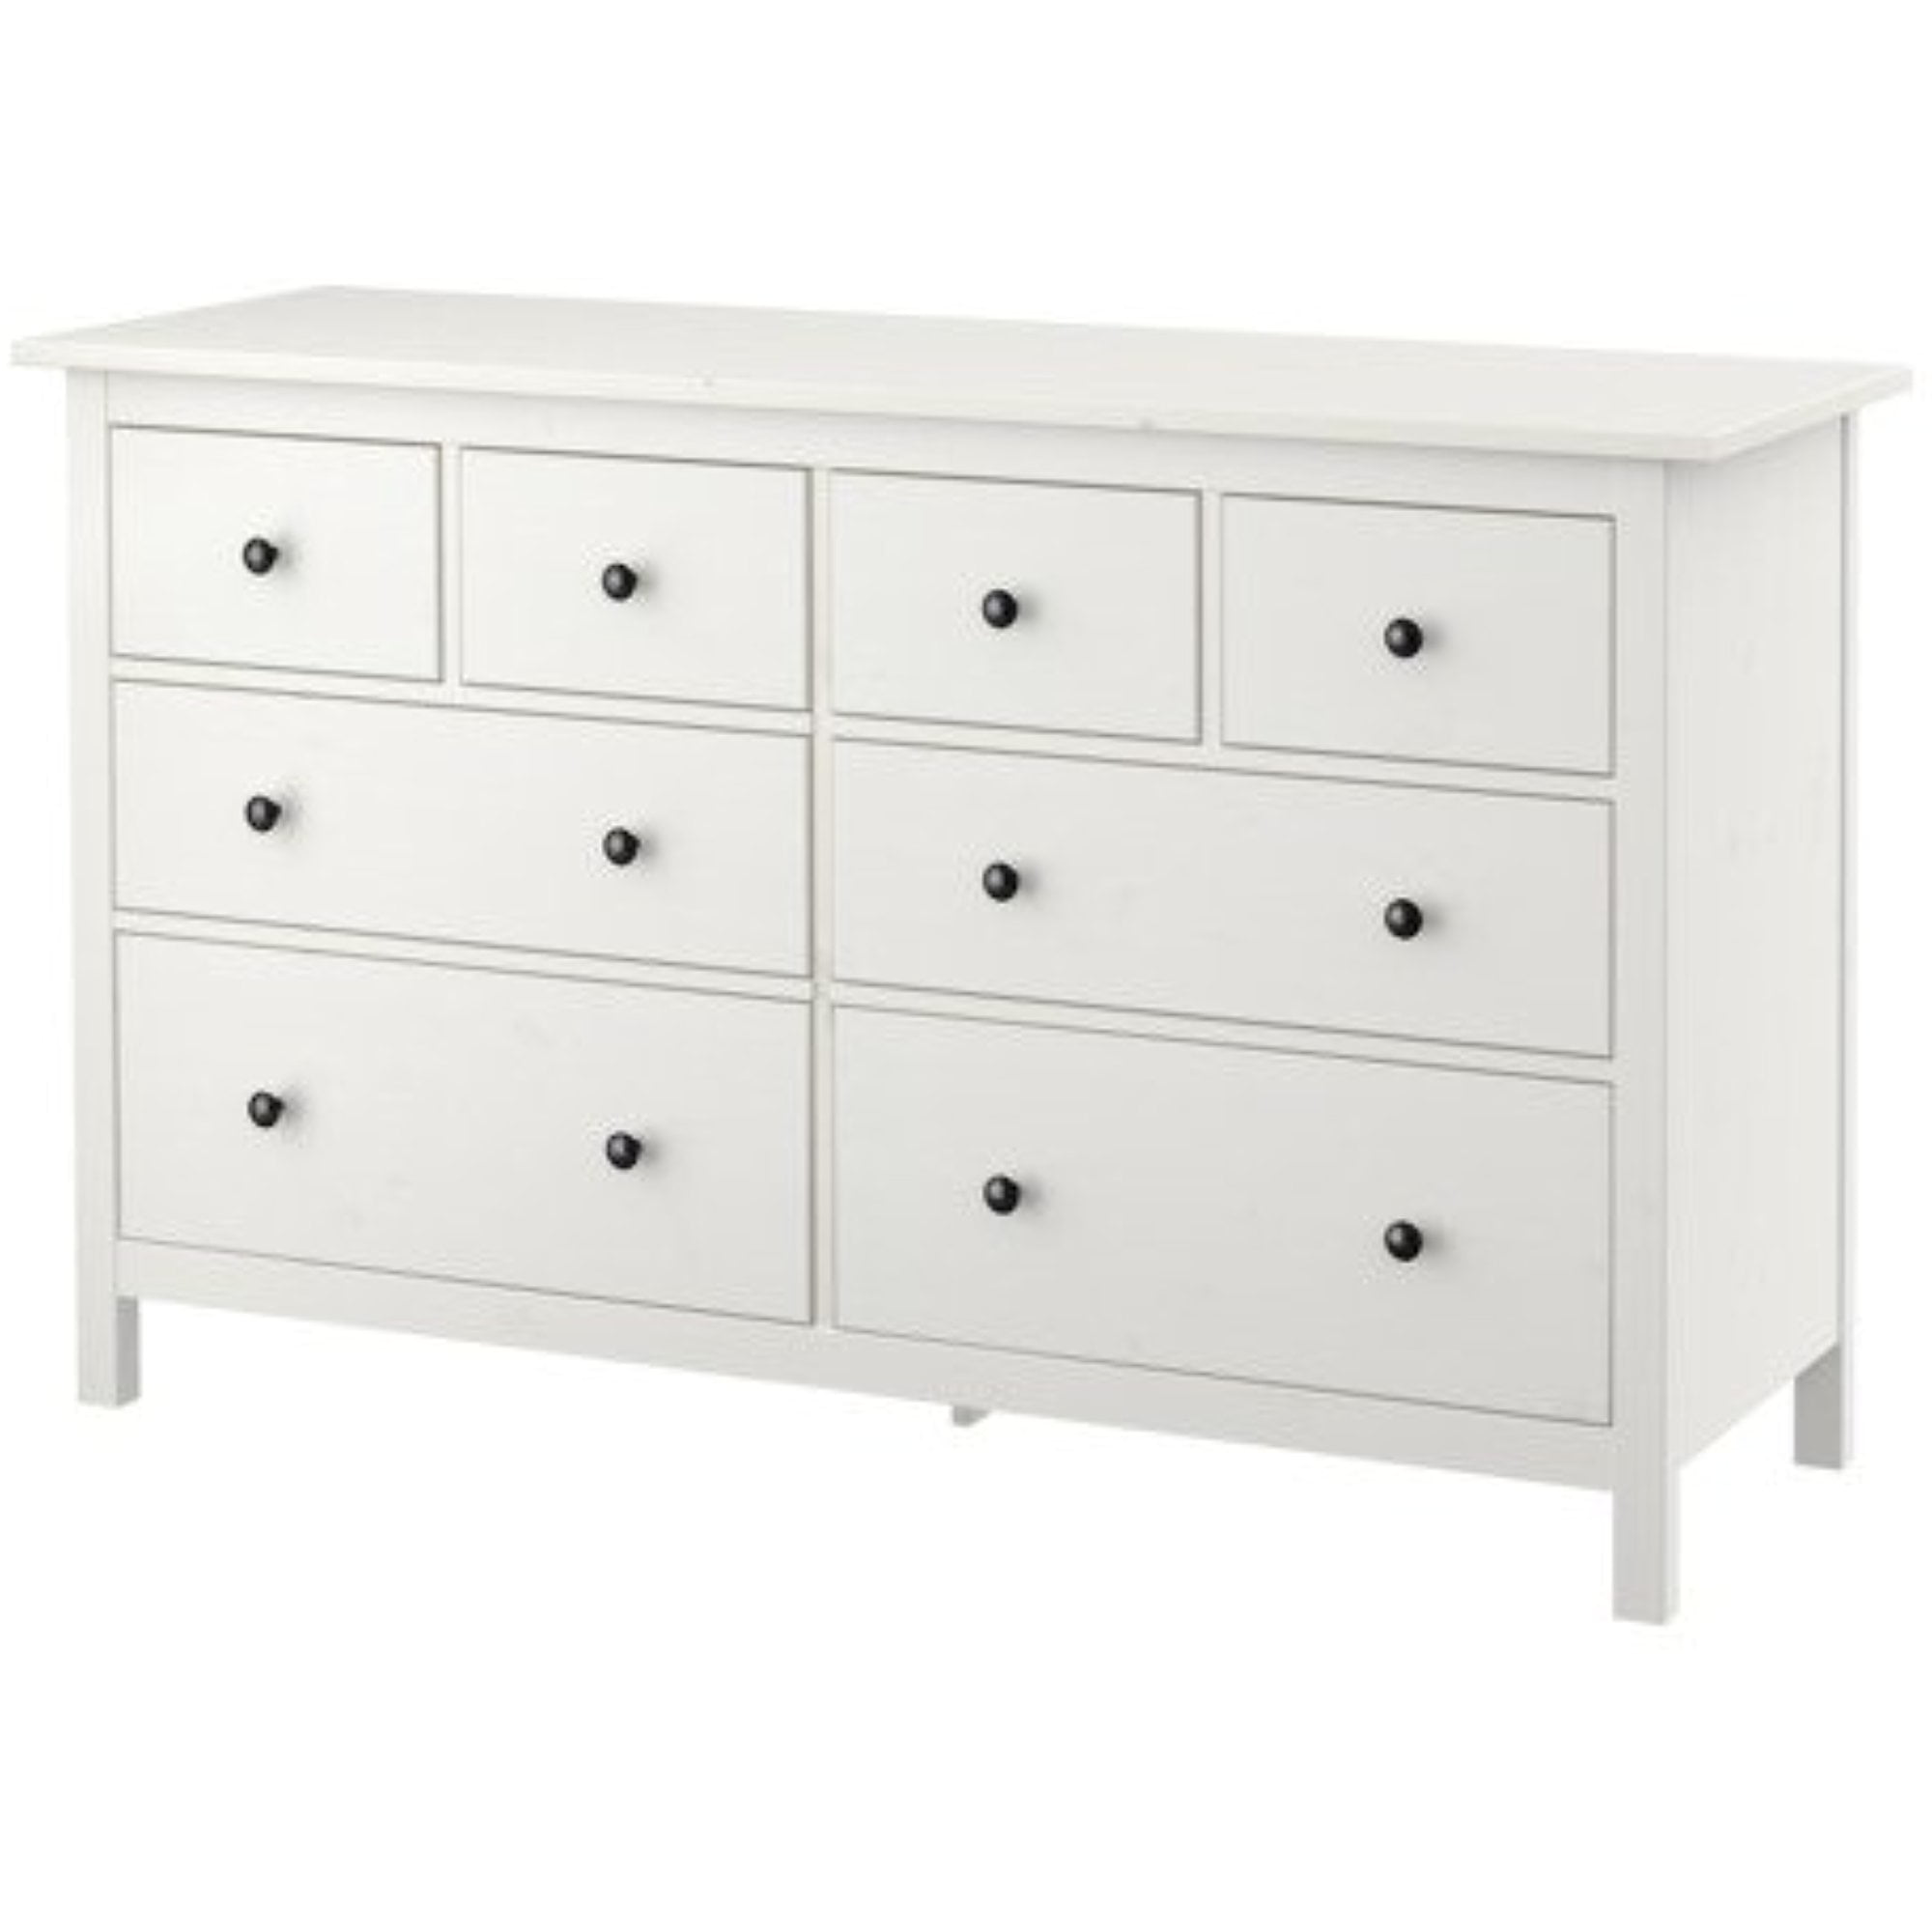 Ikea 8 Drawer Dresser White Stain 228 52617 3834 Walmart Com